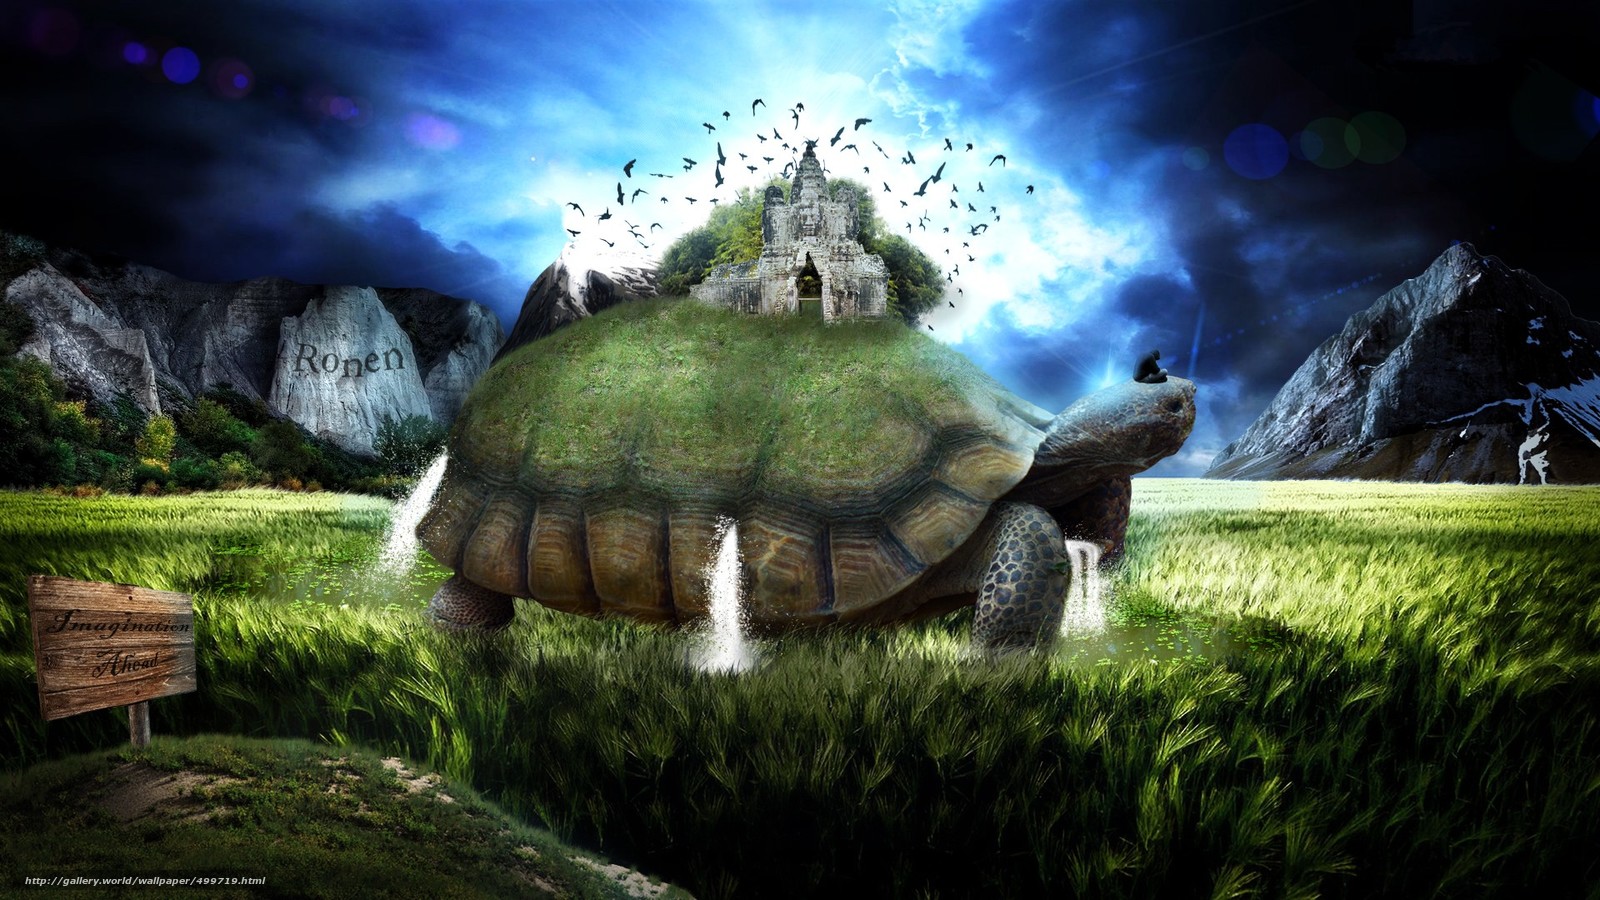 Wallpaper Turtle Castle 3d Desktop In The Pictures